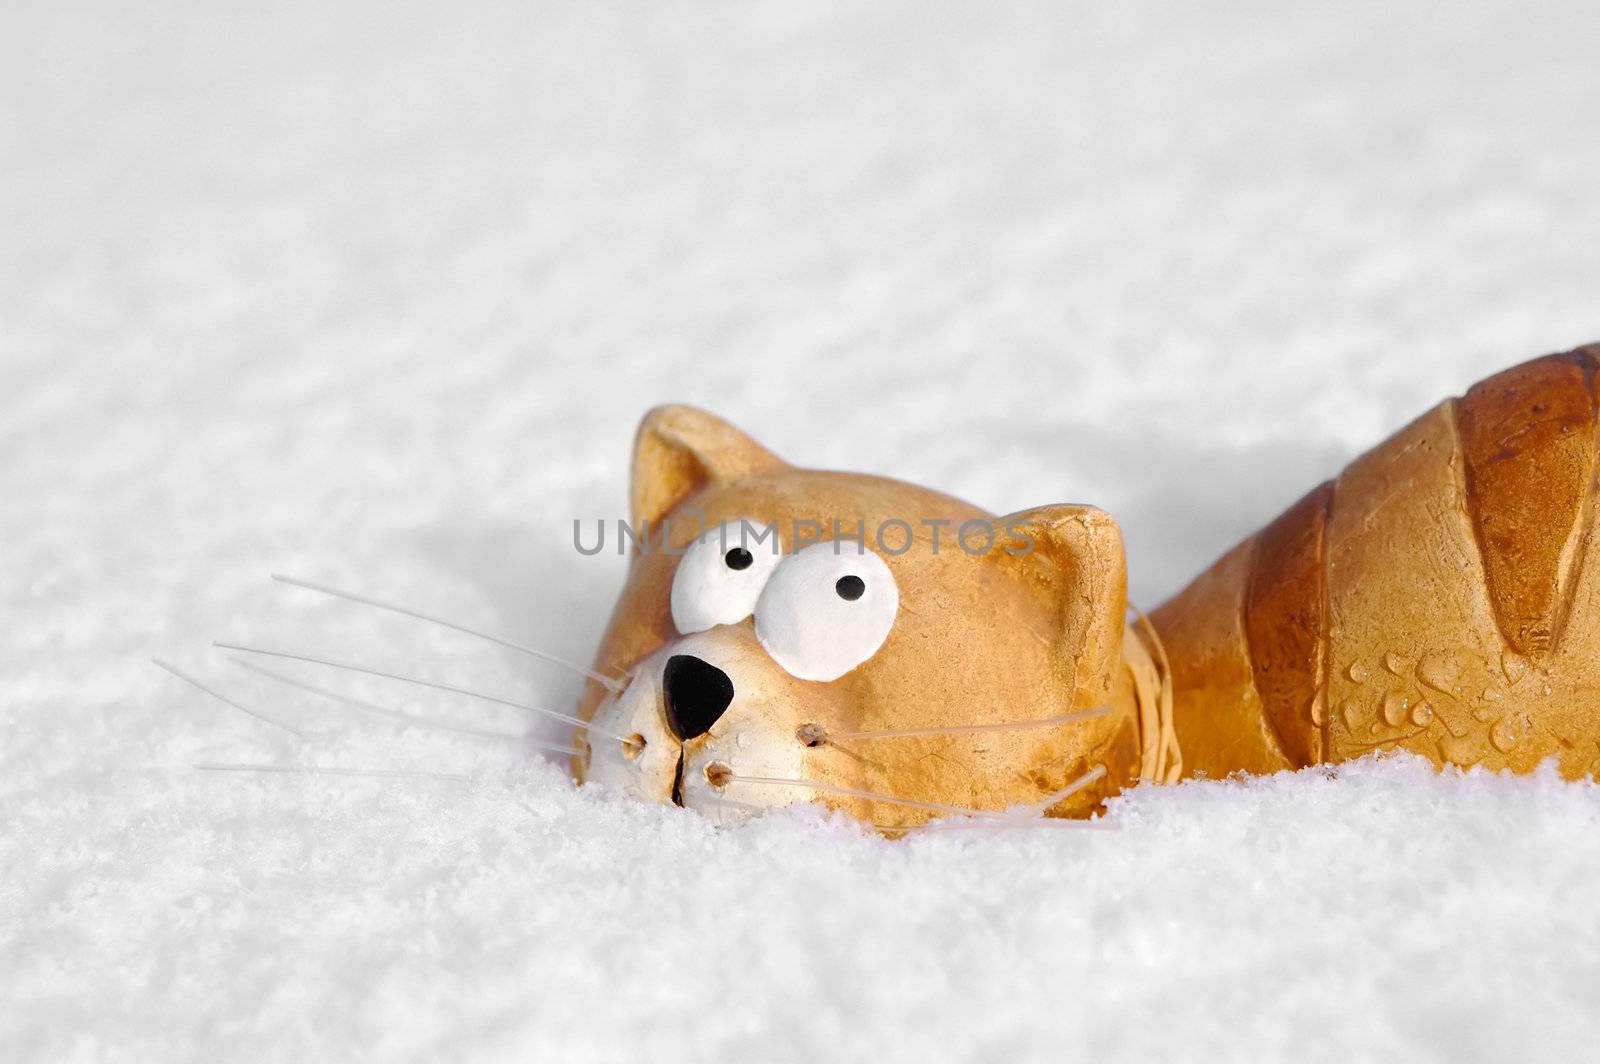 ceramic toy cat sinking into snow